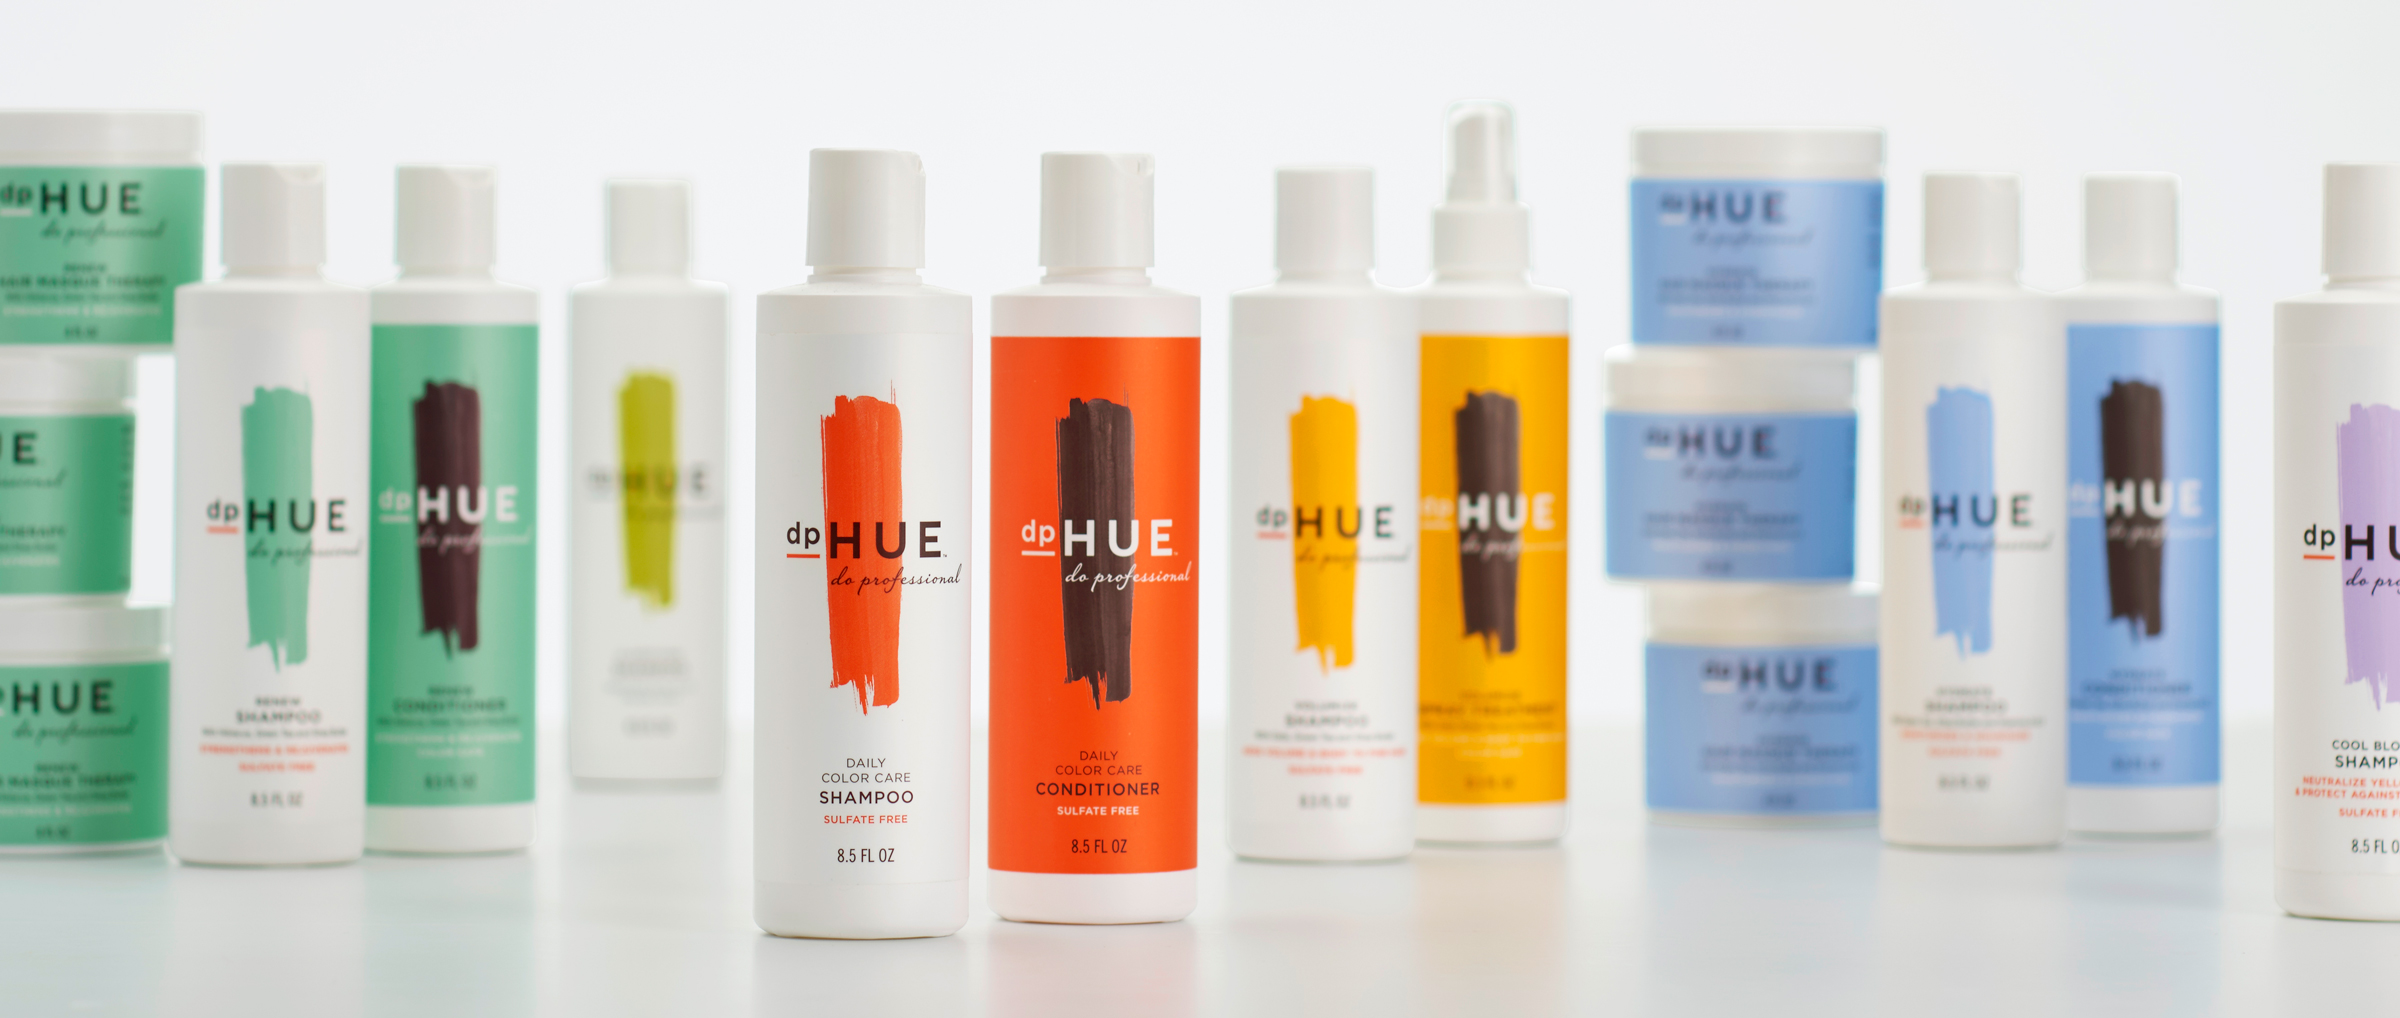 dpHue hair care packaging by Werner Design Werks